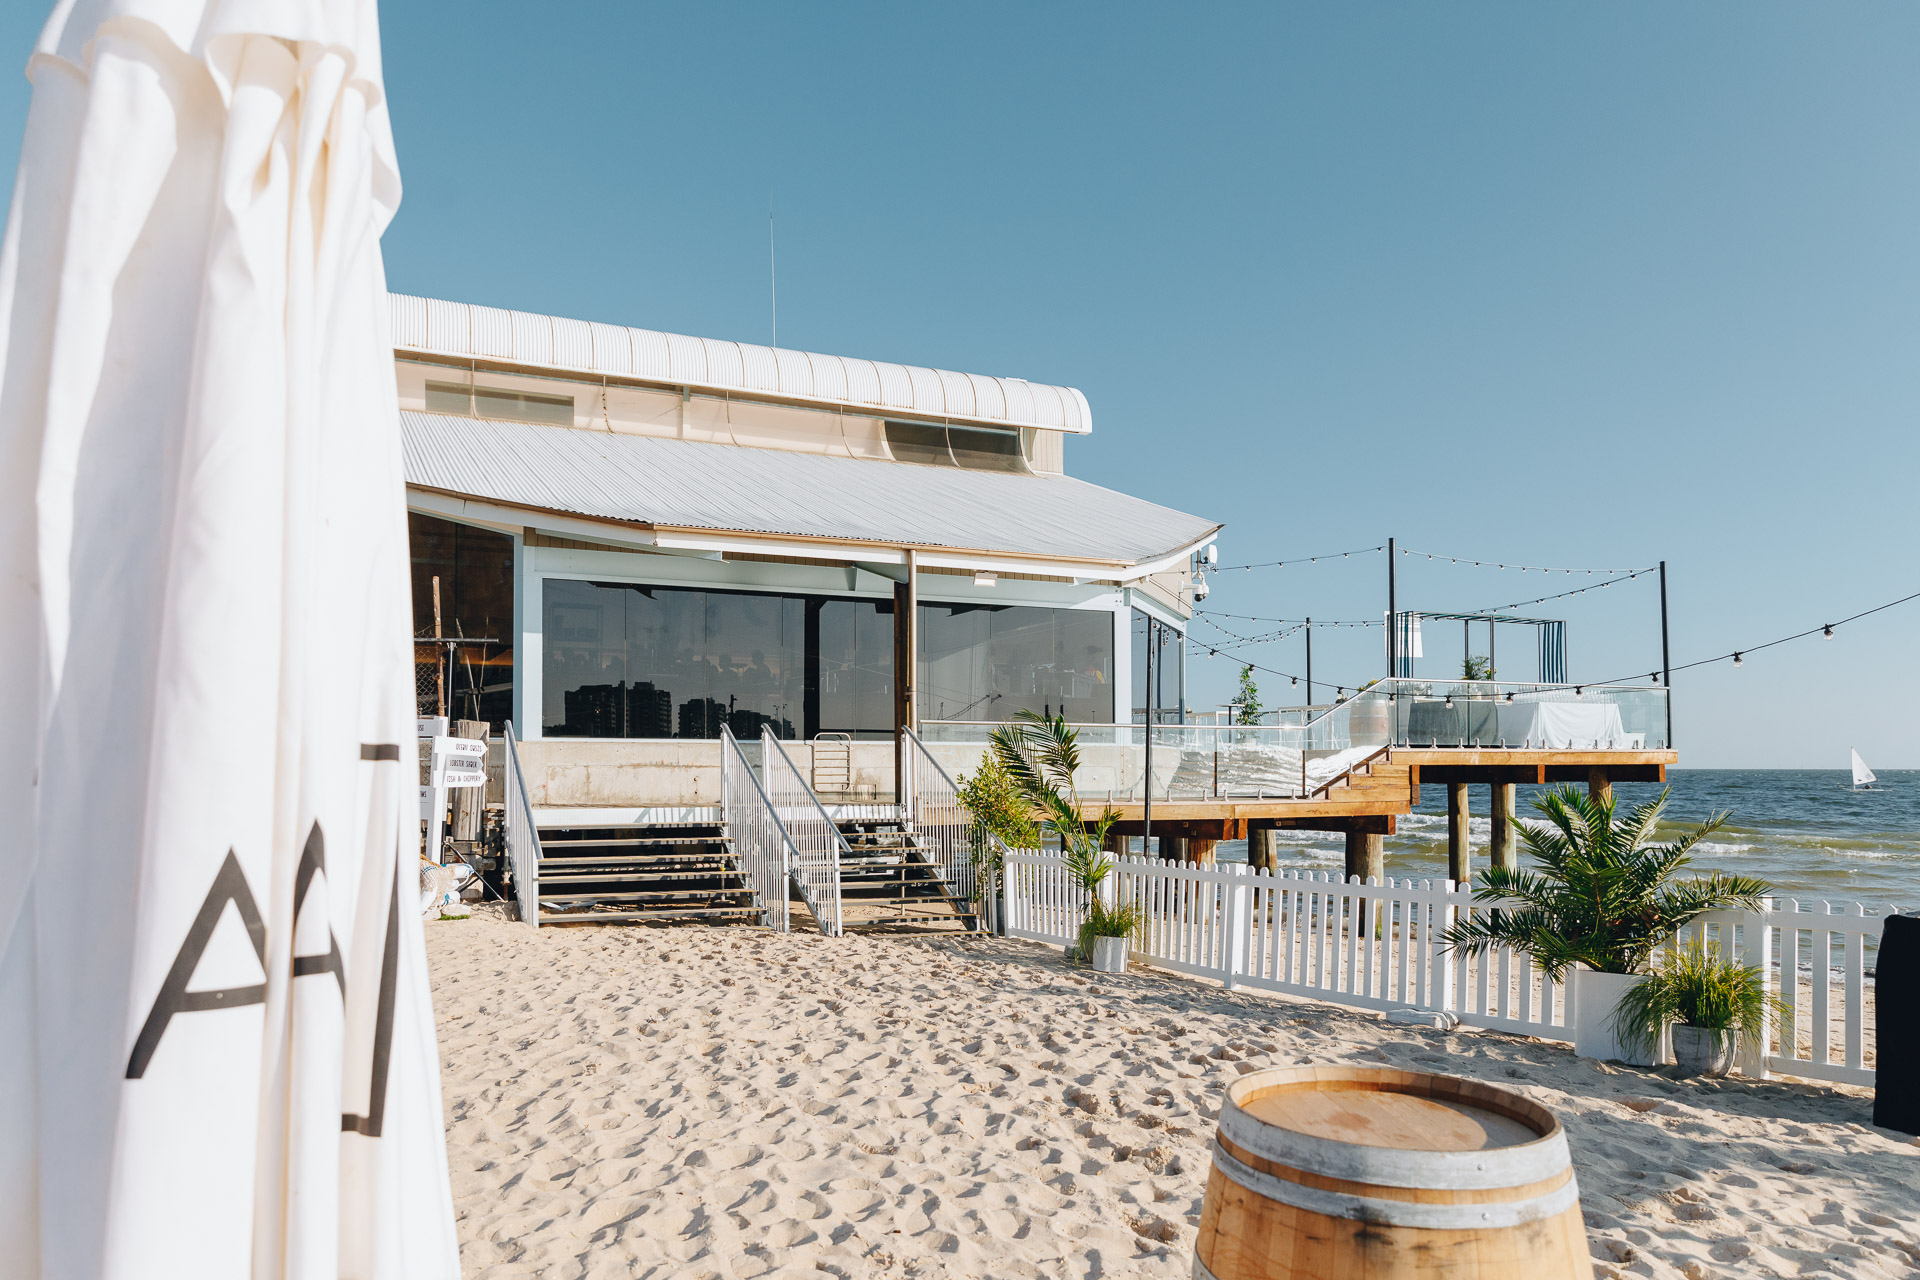 port melbourne yacht club restaurant